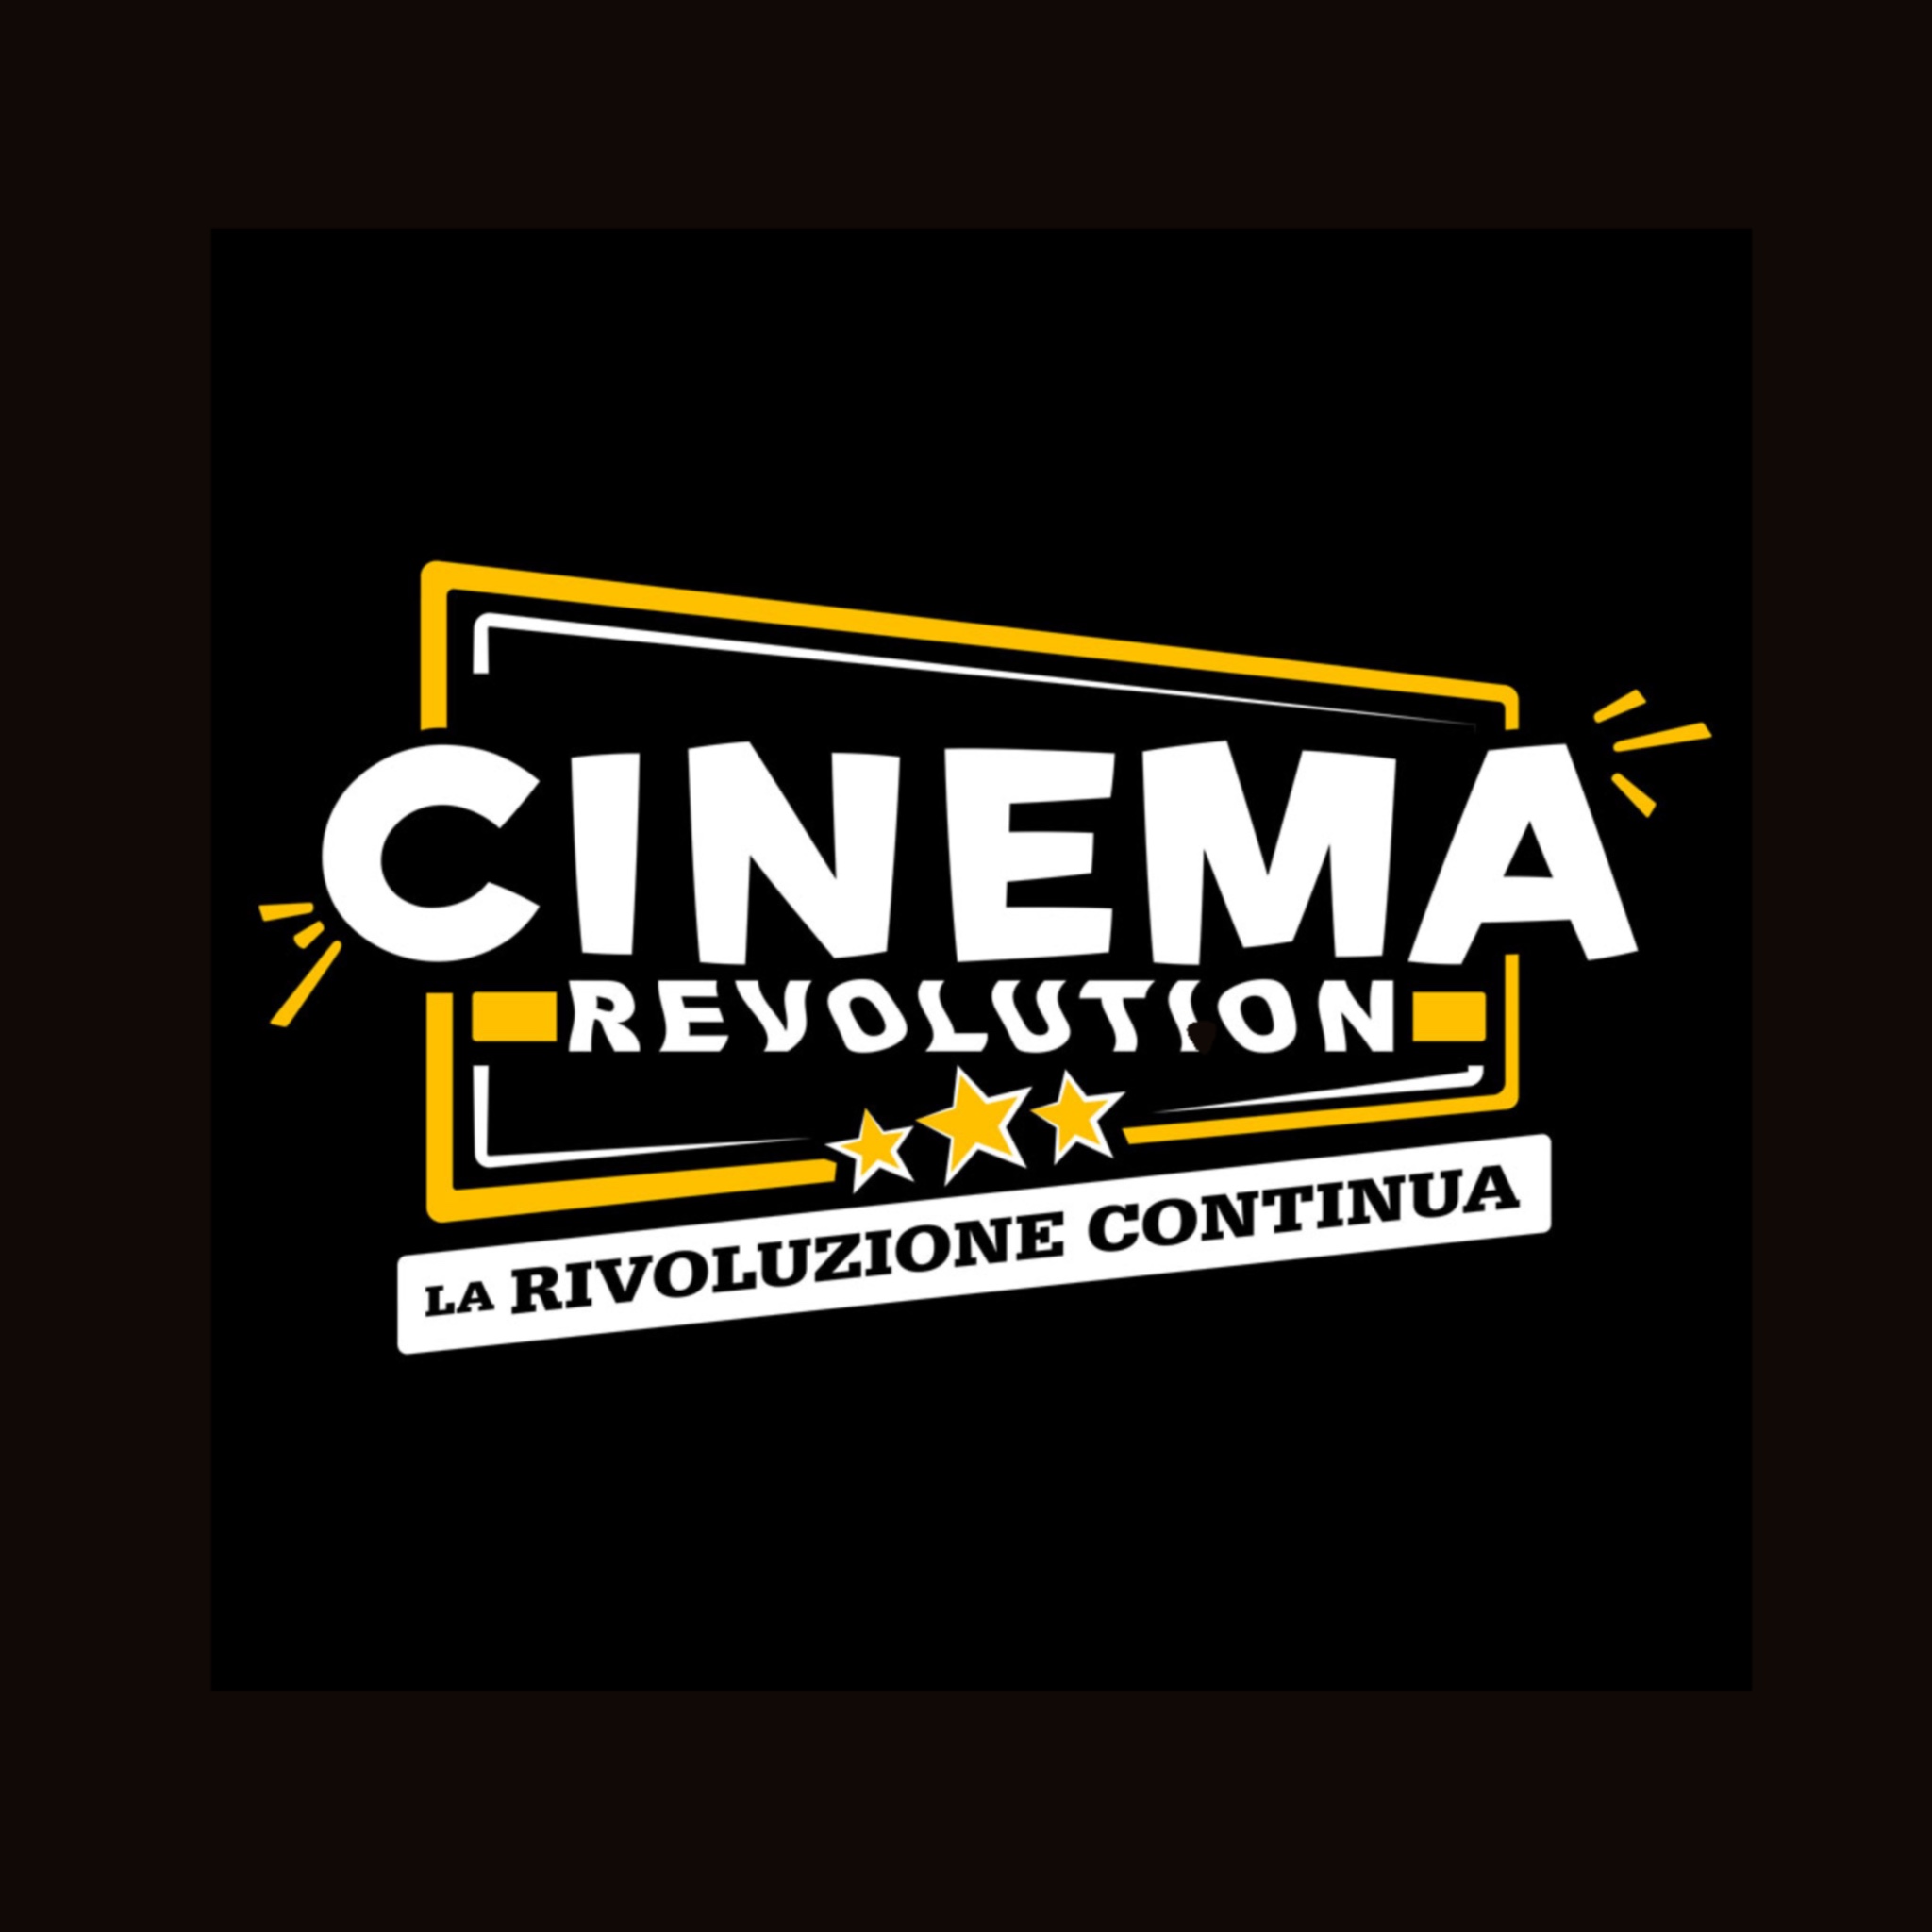 CINEMA REVOLUTION